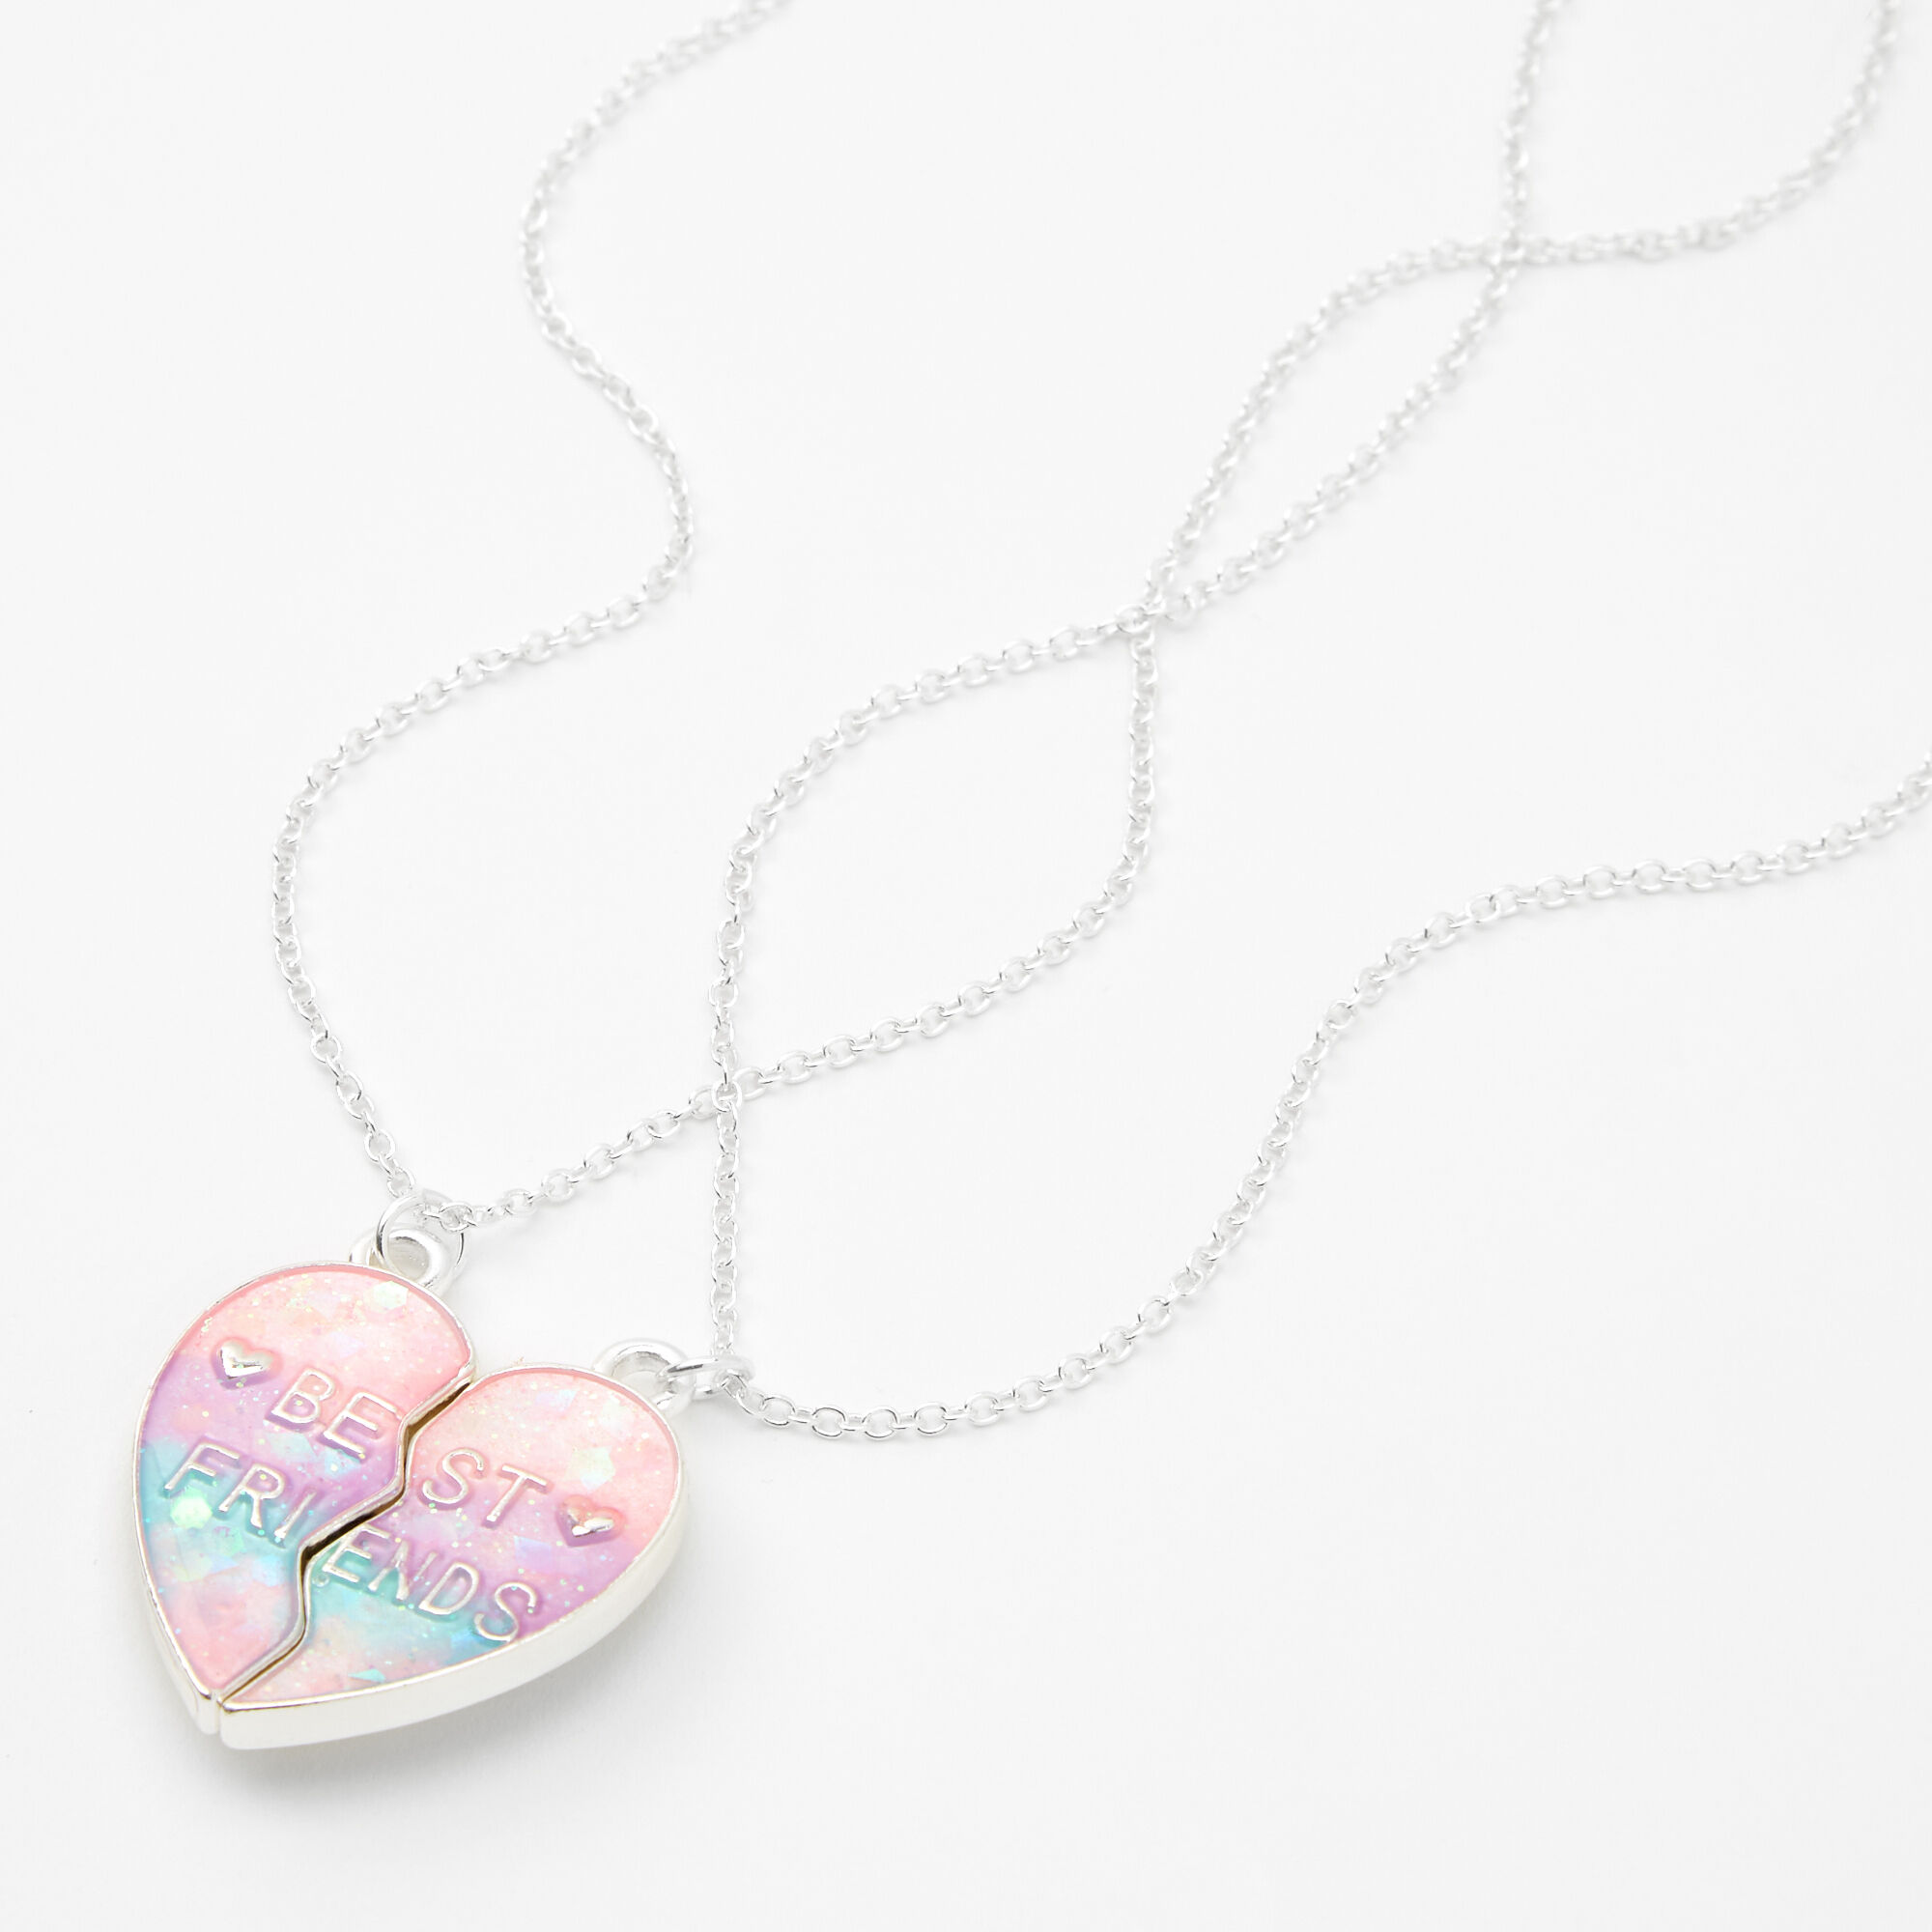 Details about   Claire’s Unicorn Bff Best Friend Necklace Ring Bracelet Jewelry Rainbow Bag Lot 